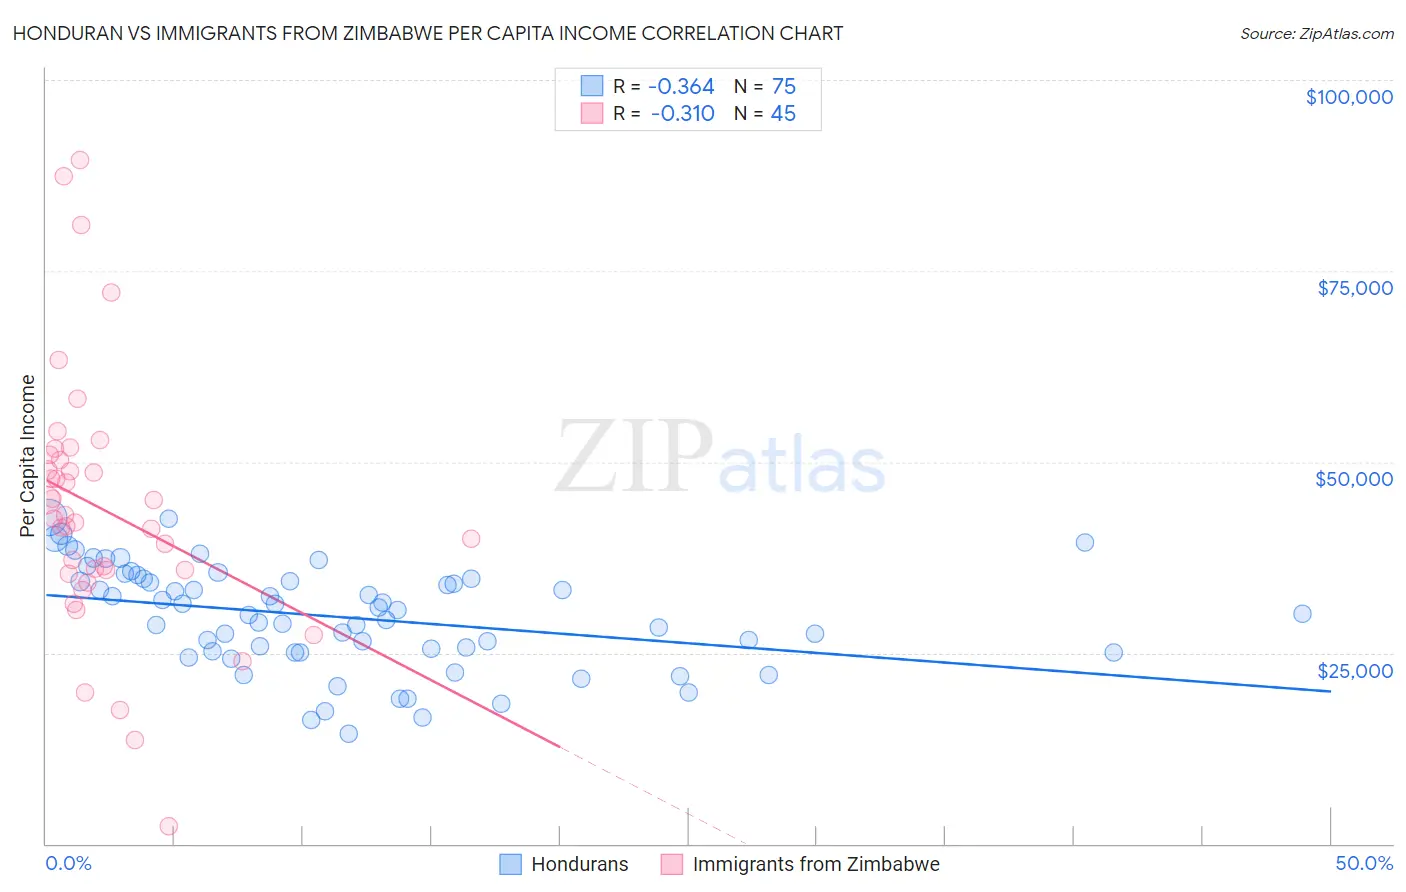 Honduran vs Immigrants from Zimbabwe Per Capita Income